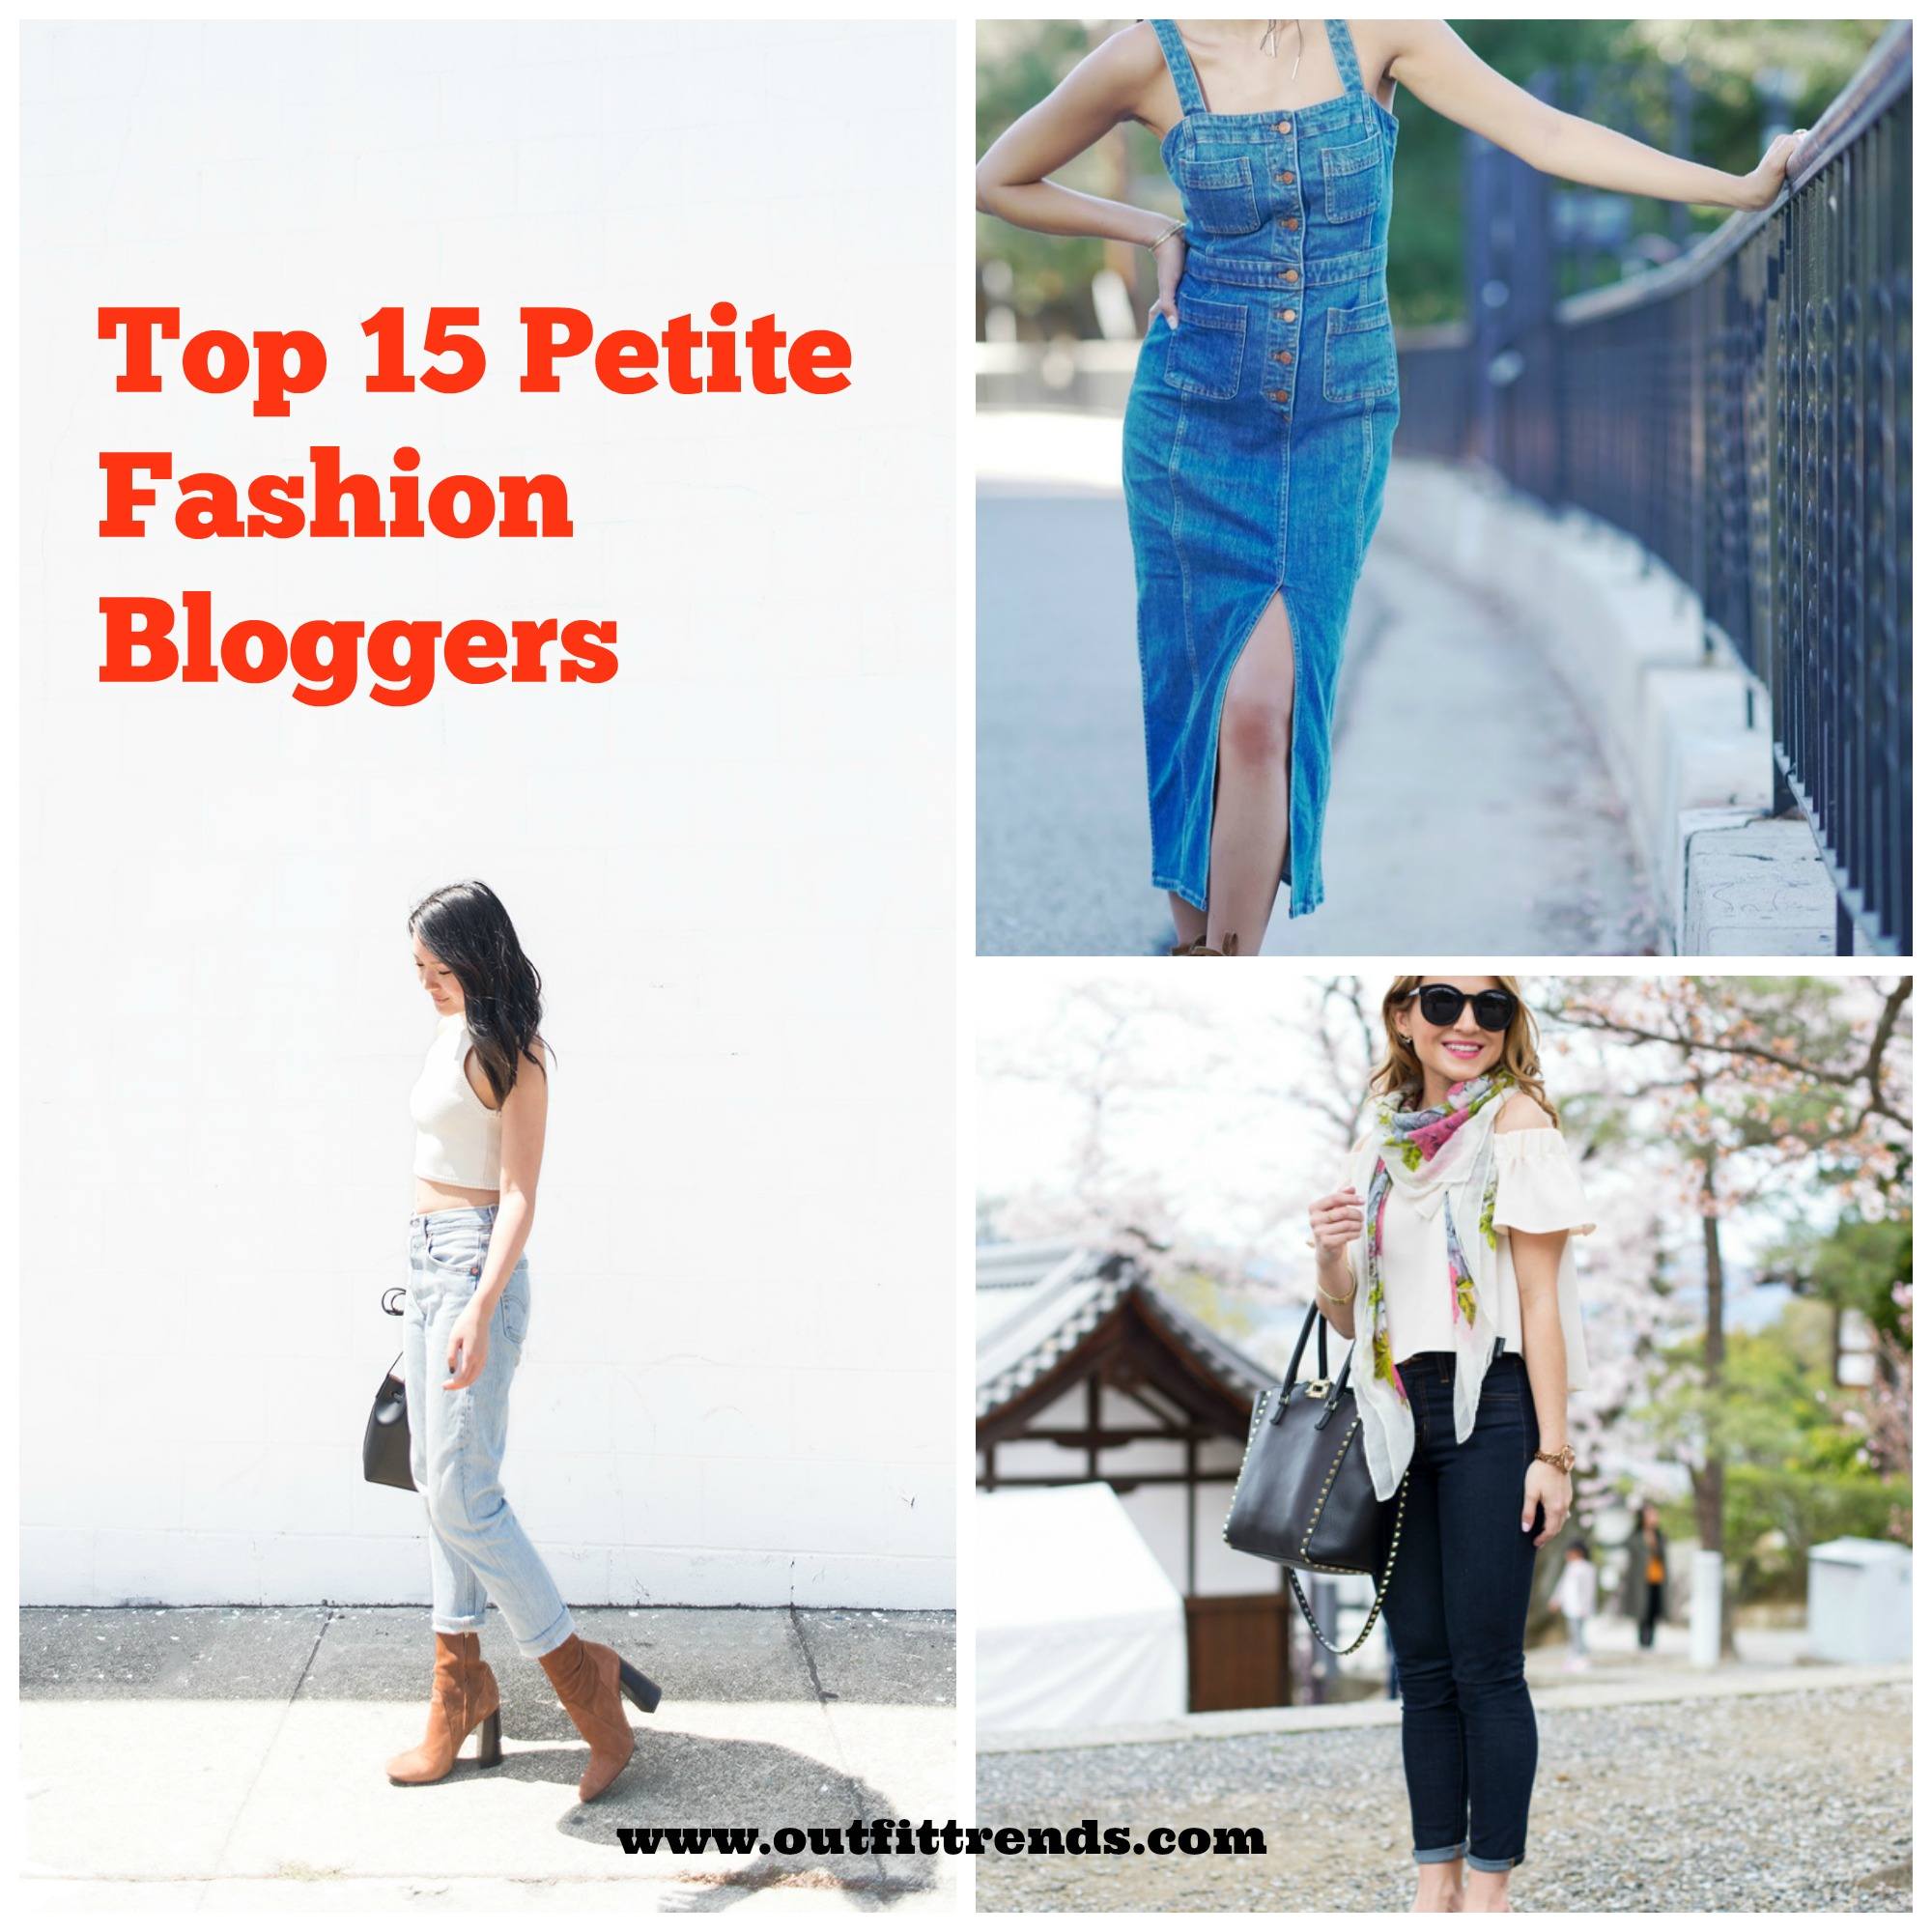 Petite Fashion Bloggers-Top 15 Petite Stylist to Follow